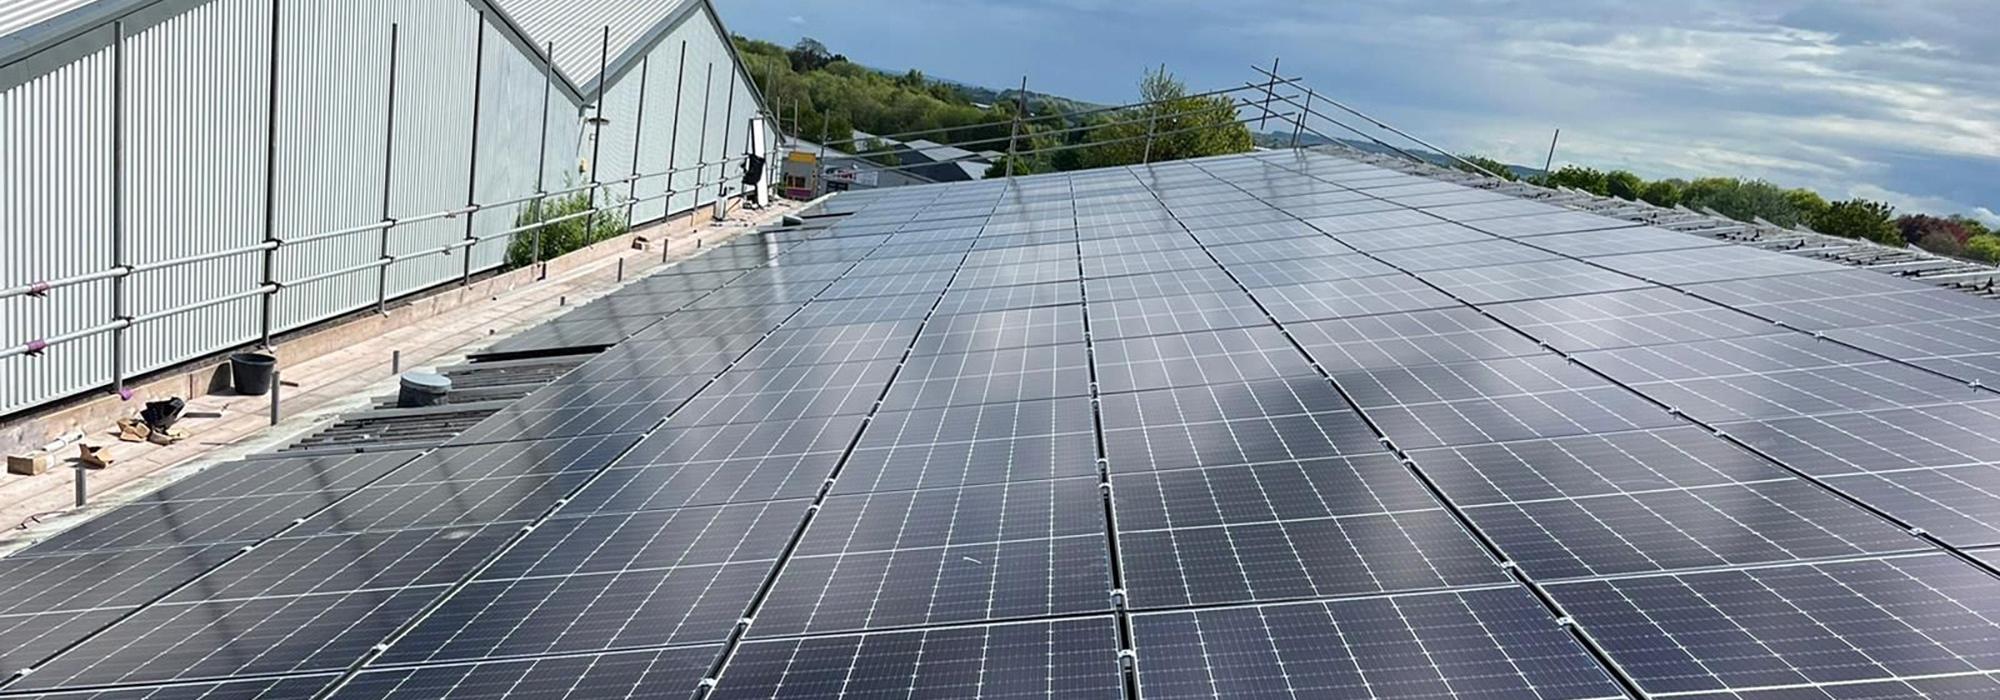 Commerical Solar Panels Cheshire Aspect Ratio 2000 700